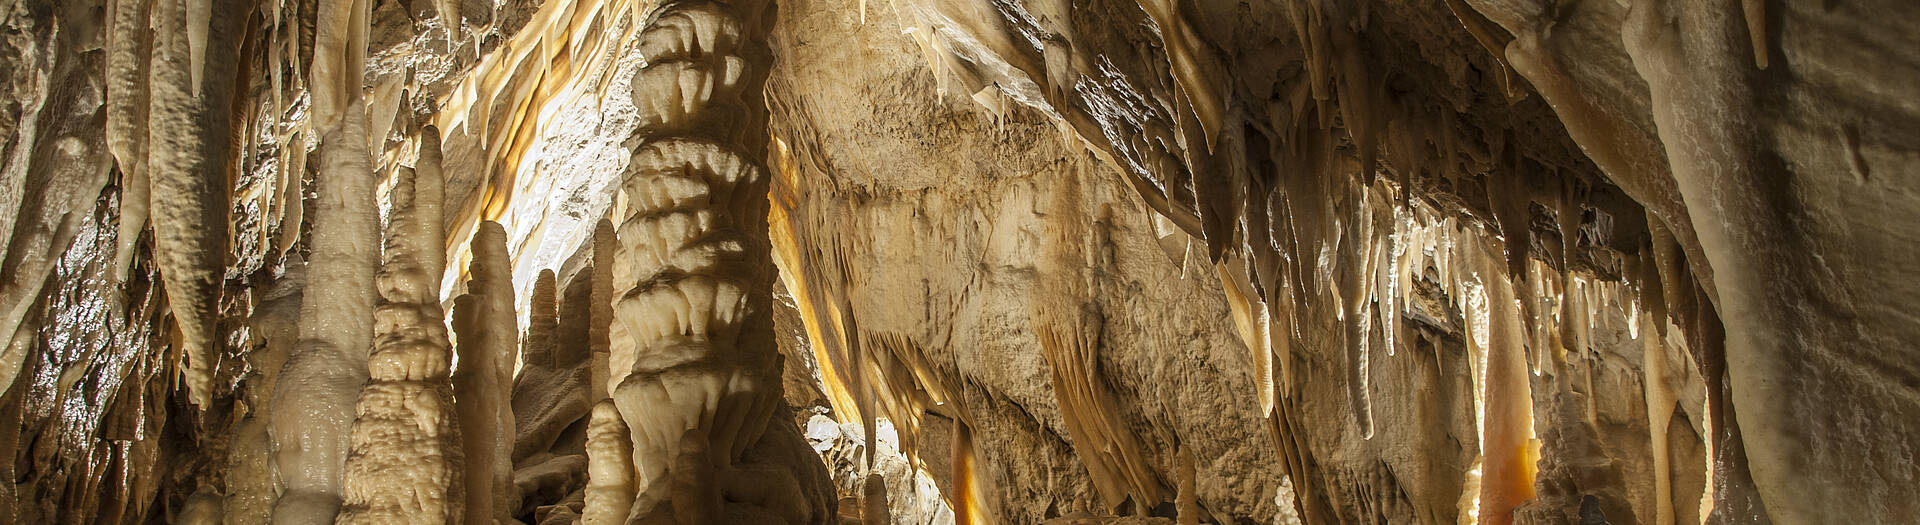 Obir Tropfsteinhöhle in Bad Eisenkappel 